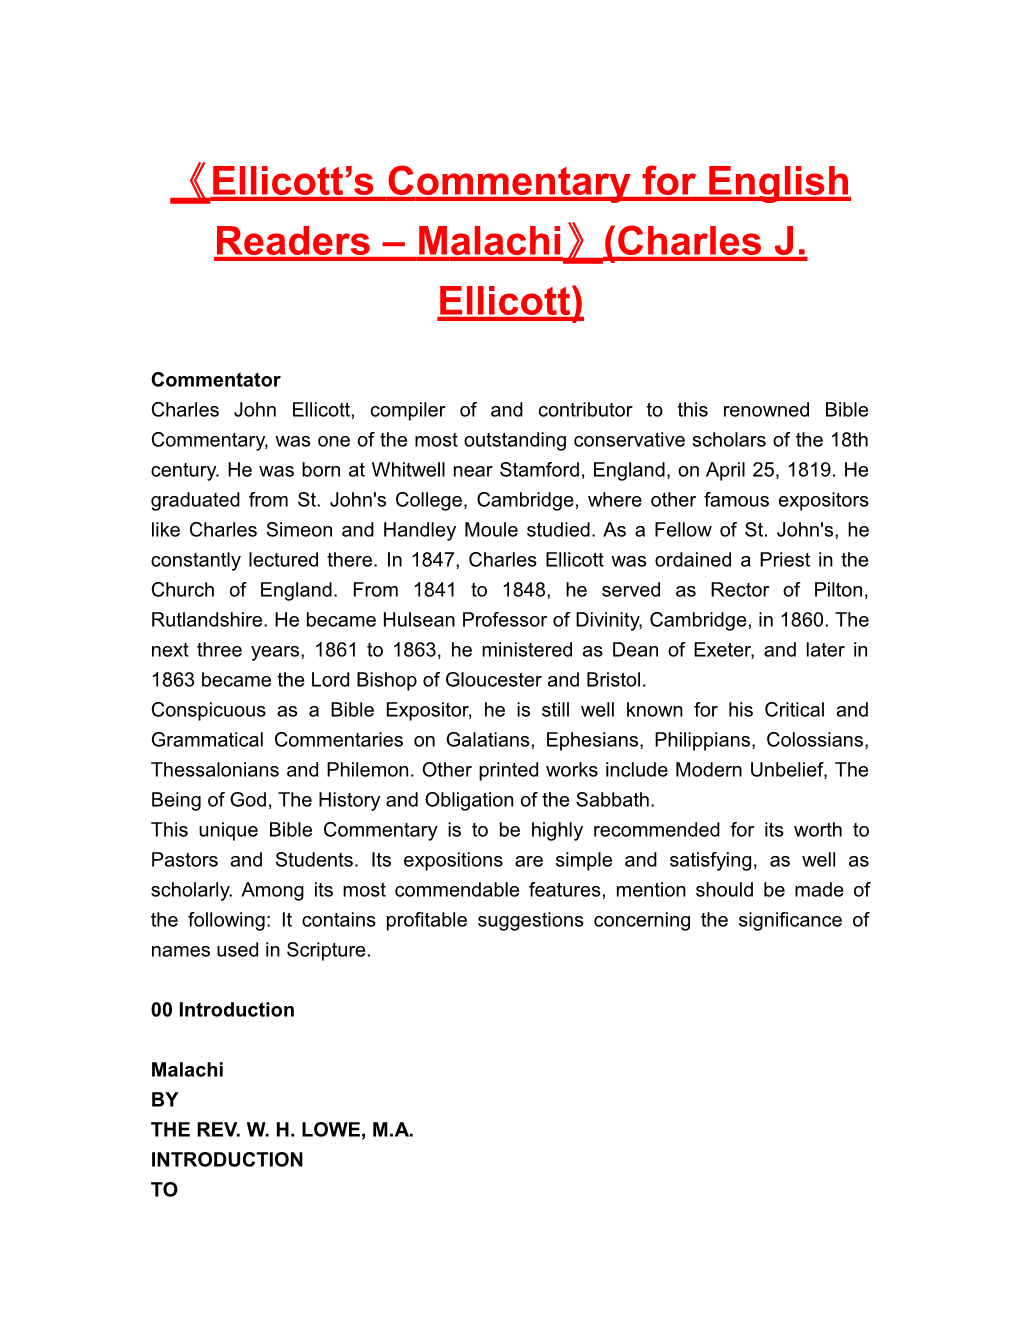 Ellicott Scommentary for English Readers Malachi (Charles J. Ellicott)